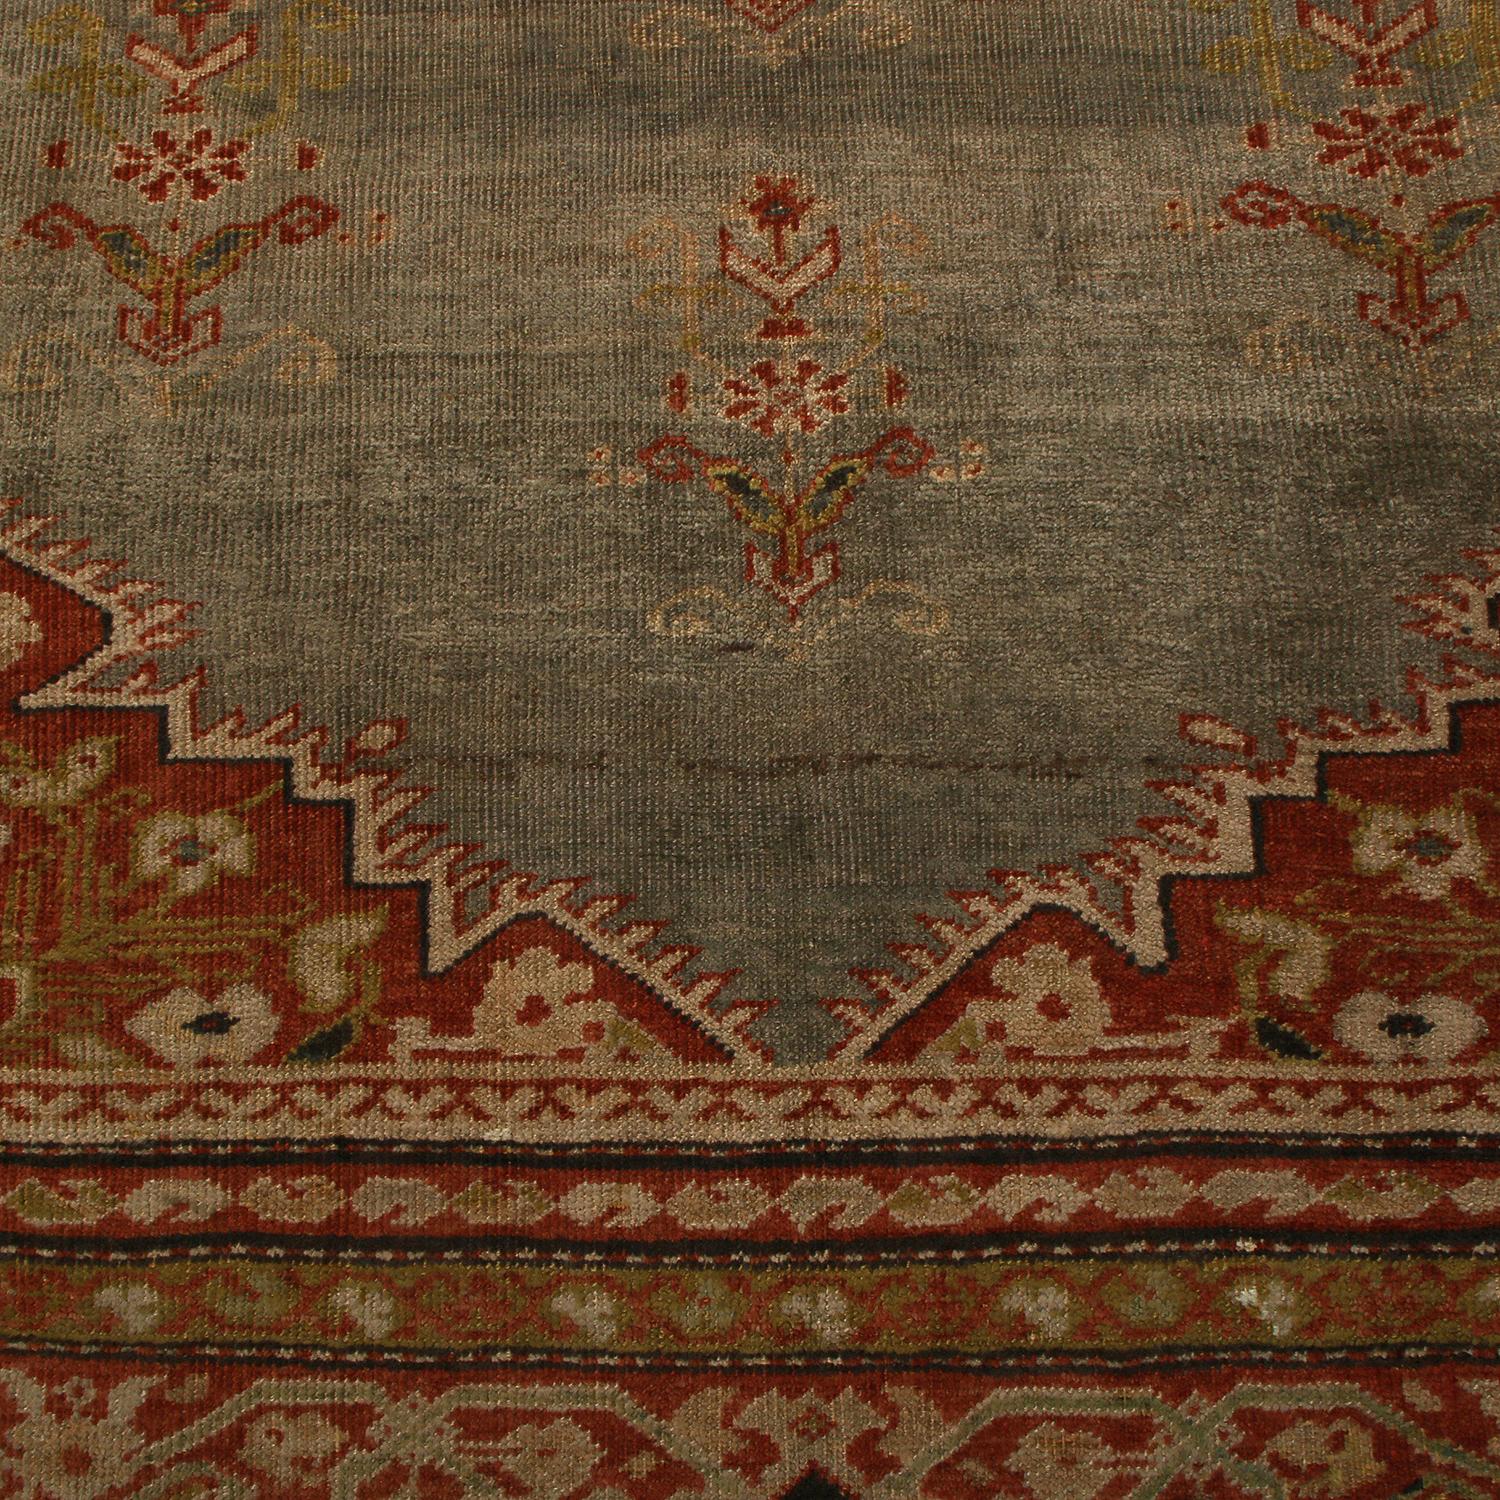 gold persian rug